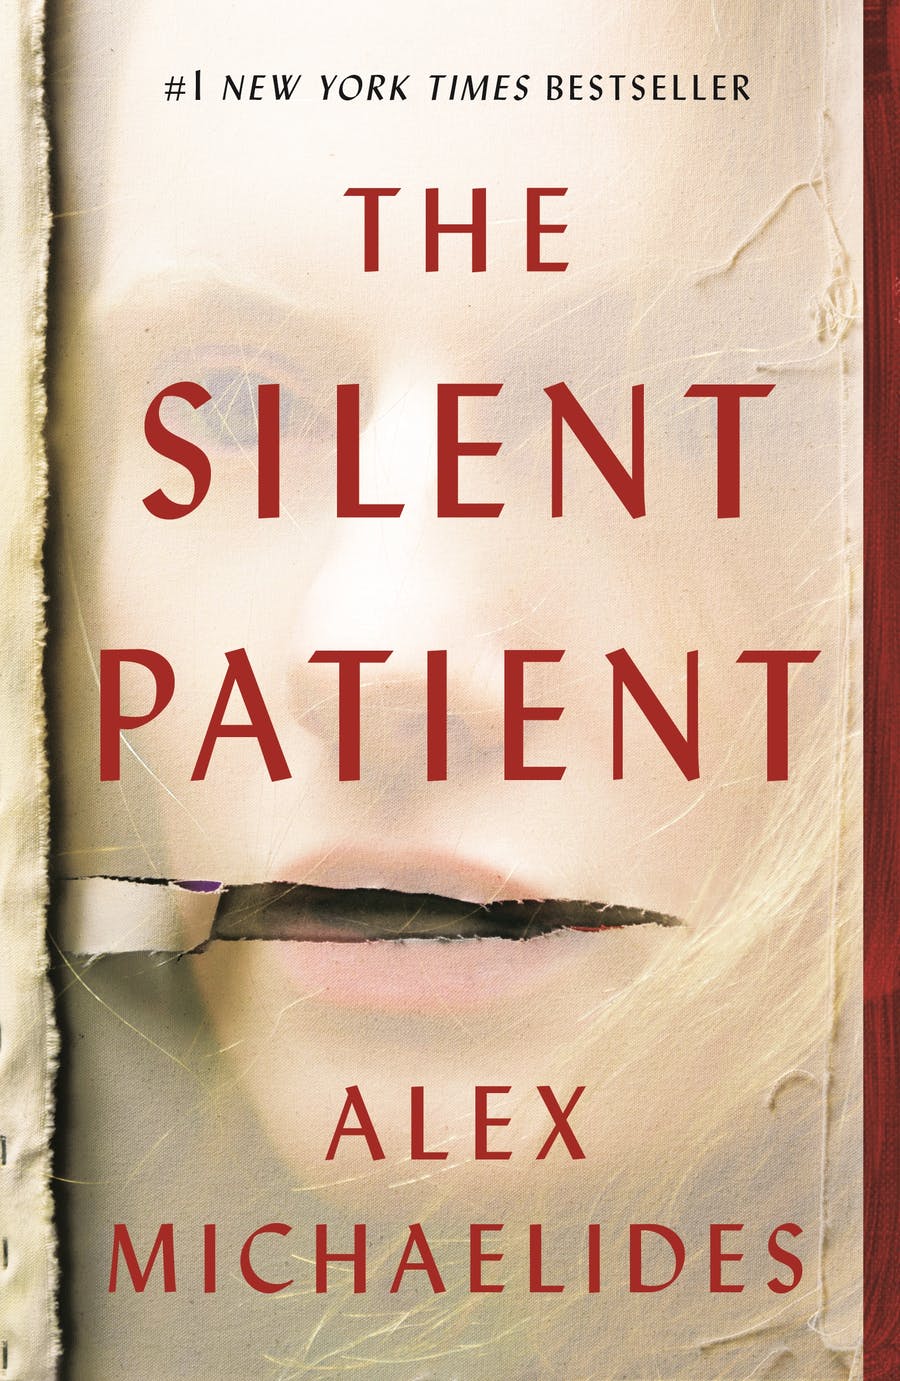 The Silent Patient by Alex Michaelides book review